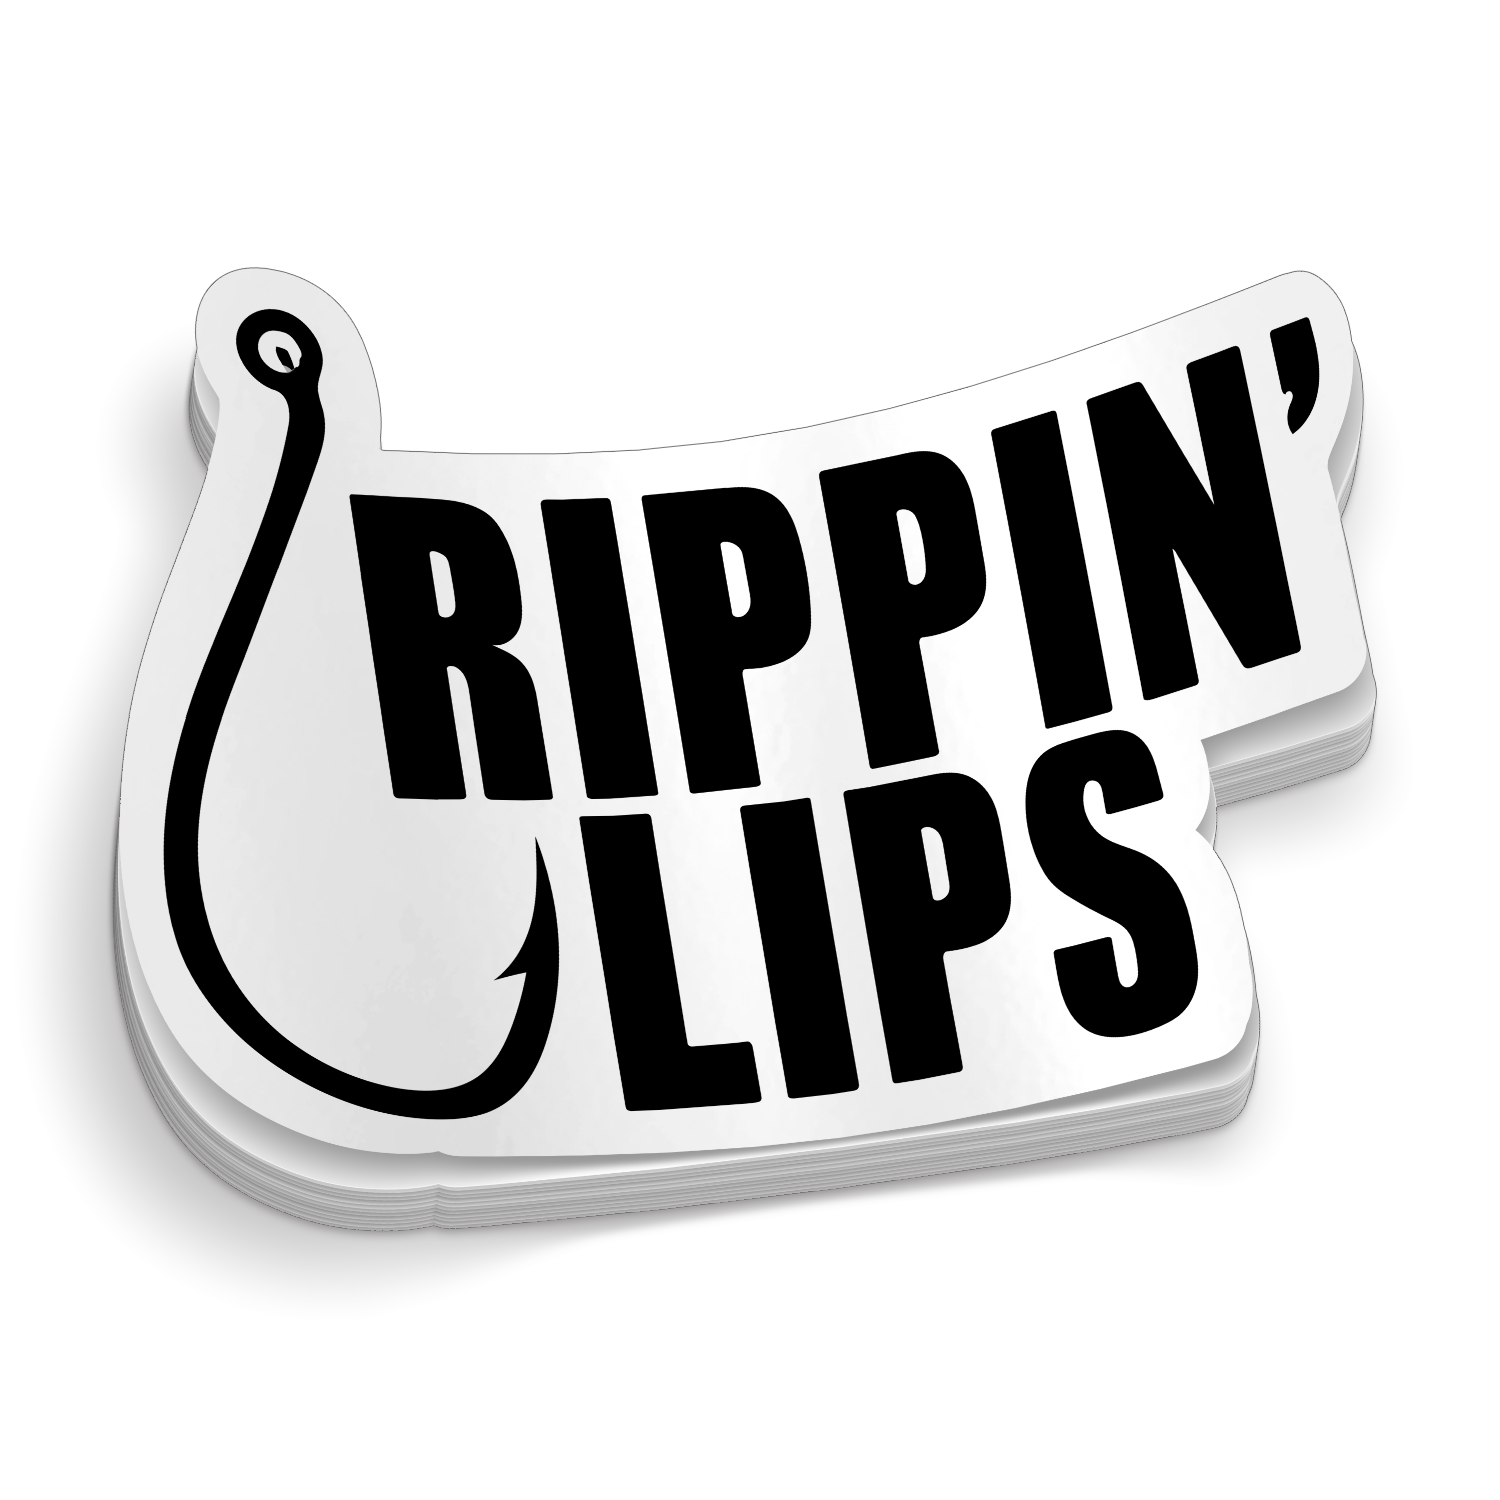 Crappie Fish Rippin Lips Kayak Vinyl Wrap Kit Graphic Decal